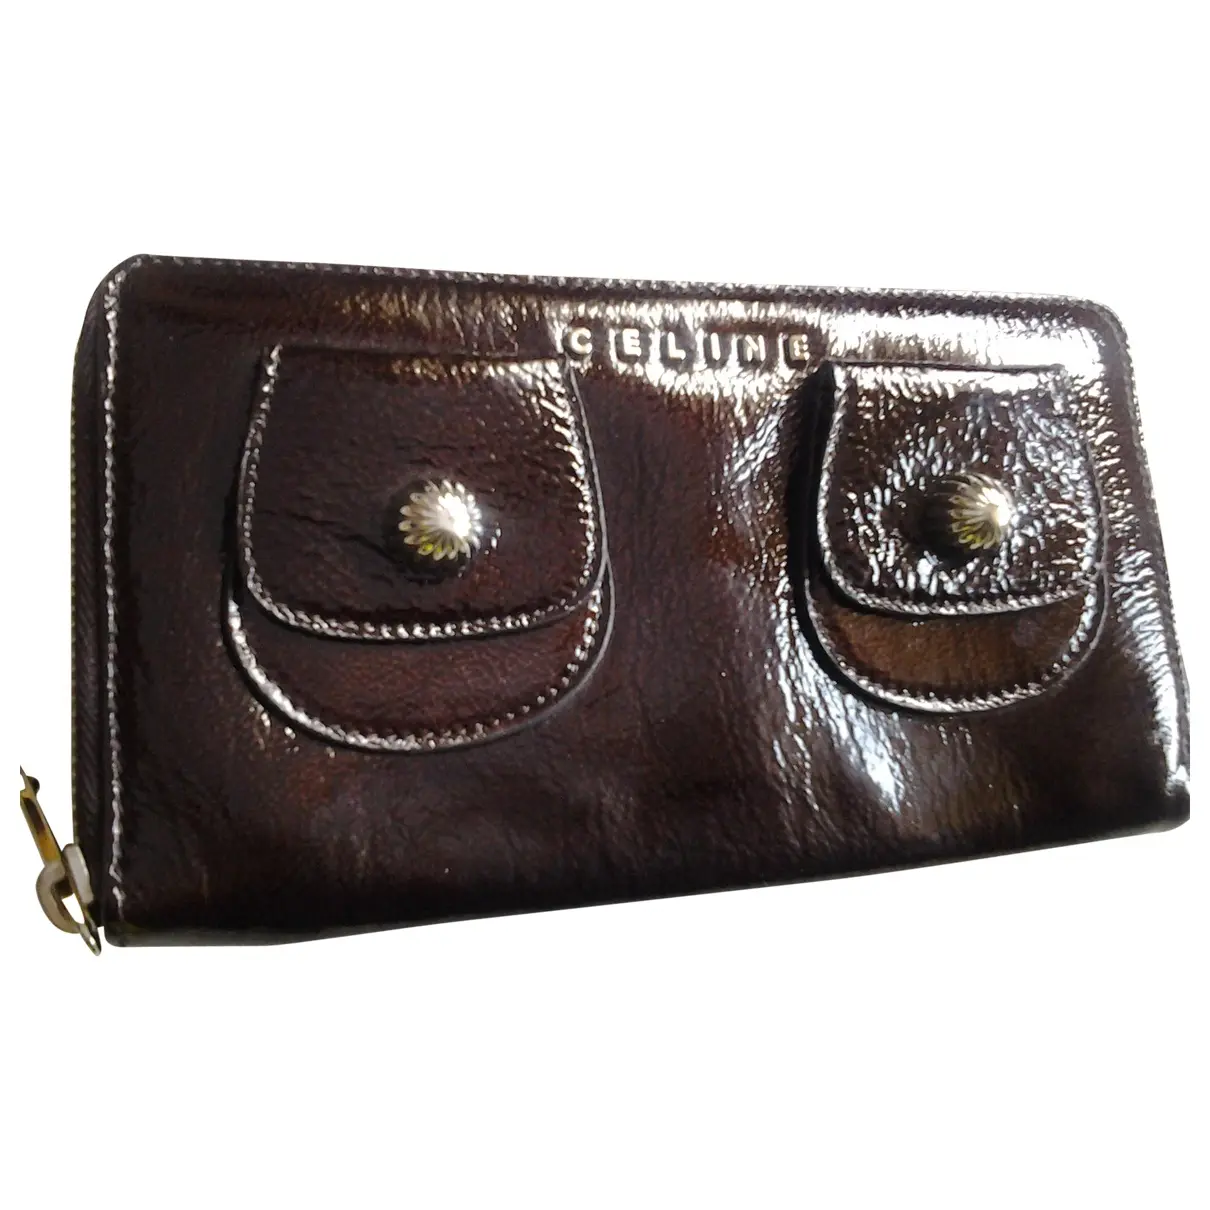 Burgundy Patent leather Wallet Celine